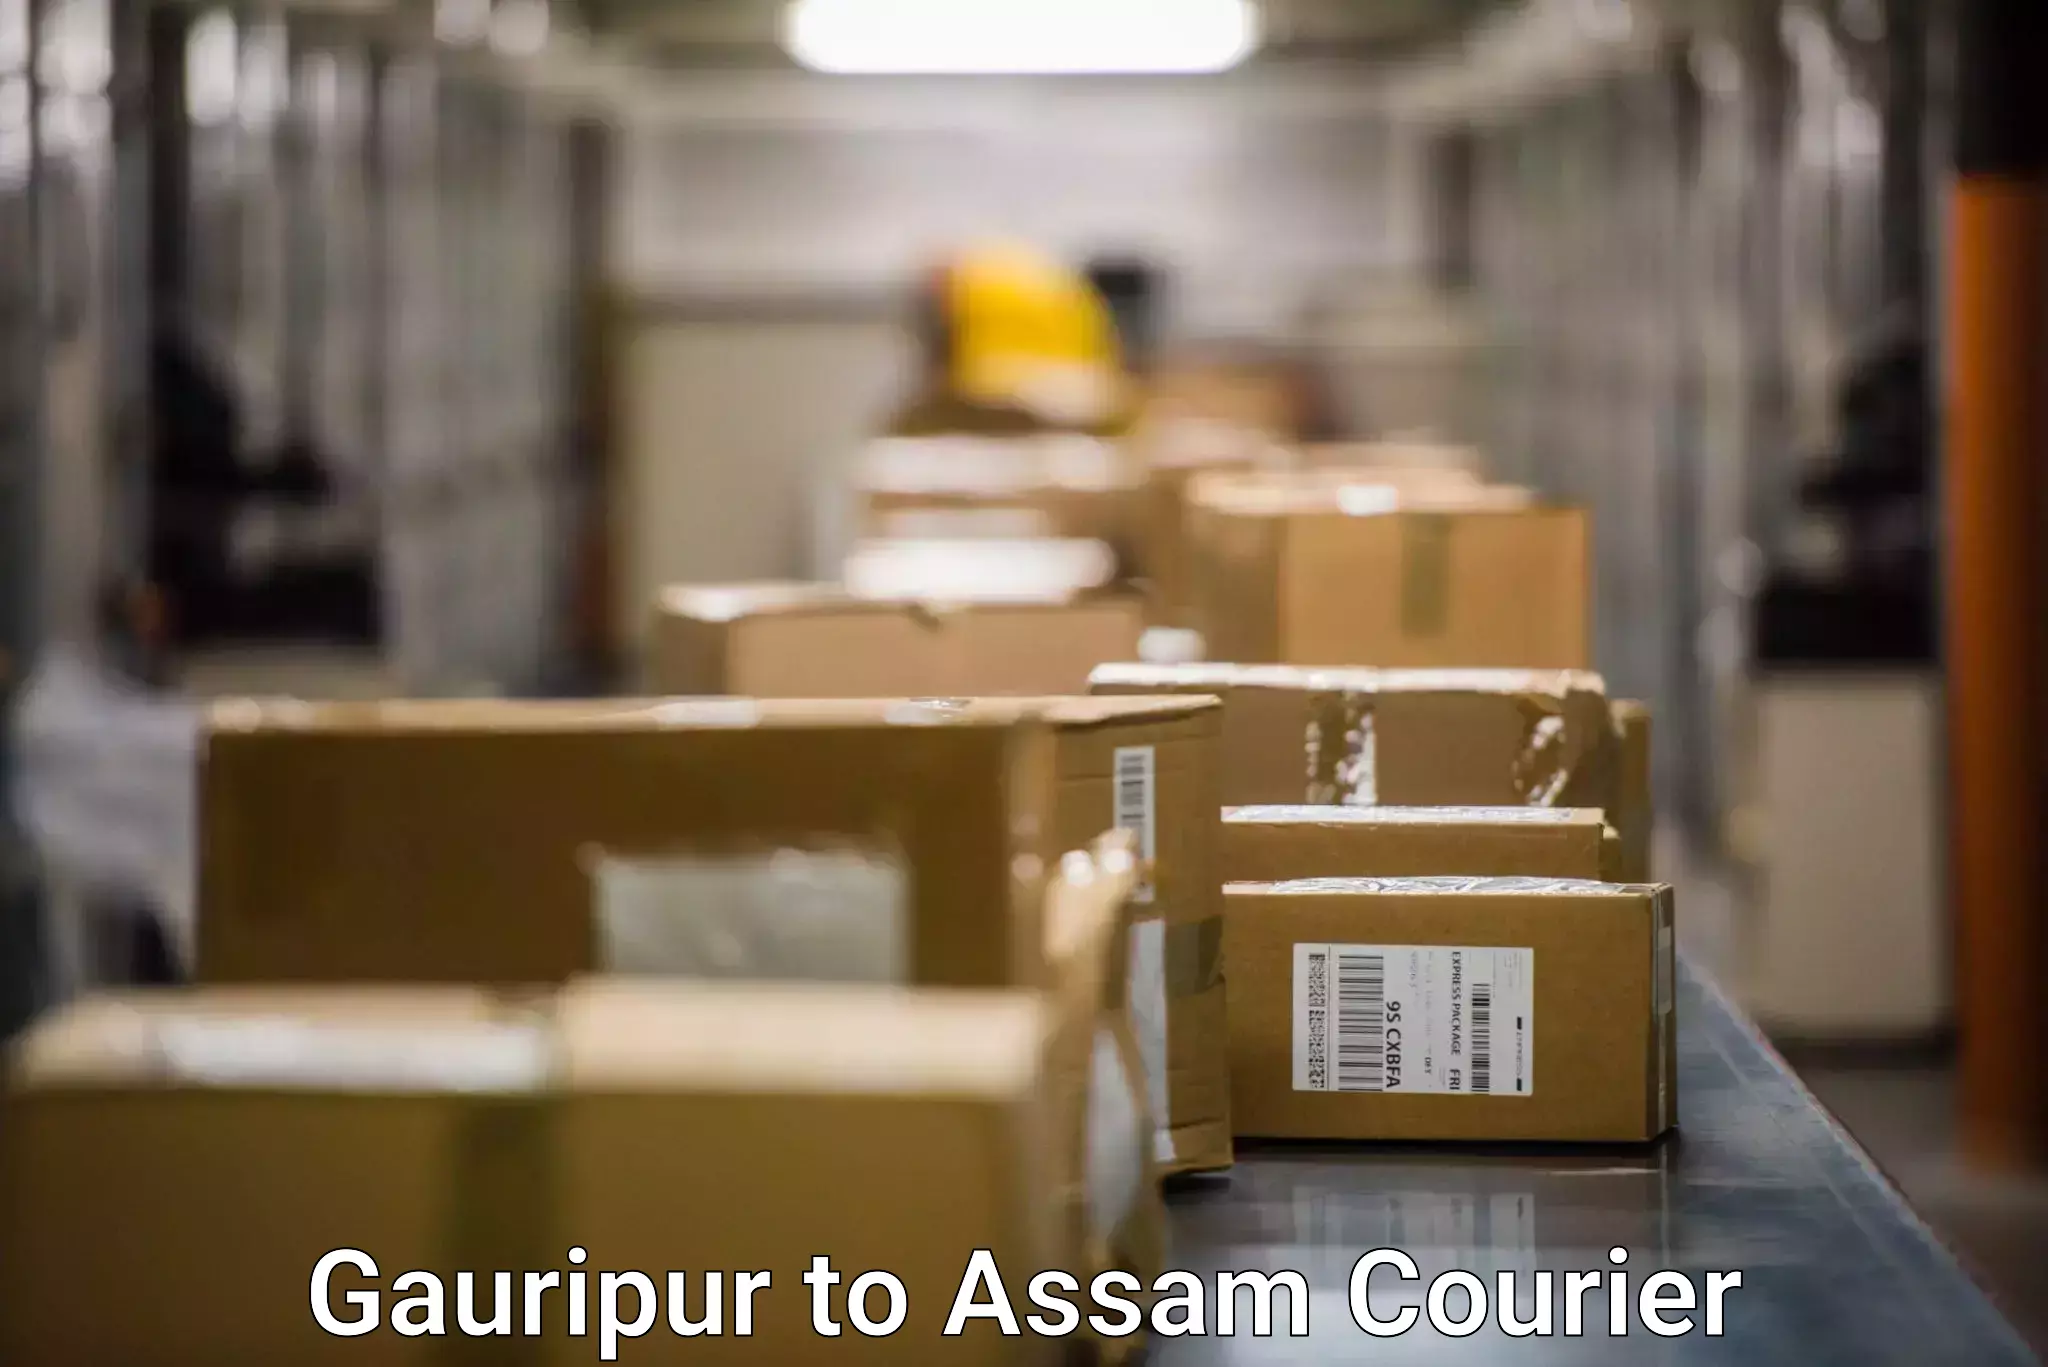 Customer-centric shipping Gauripur to Hojai